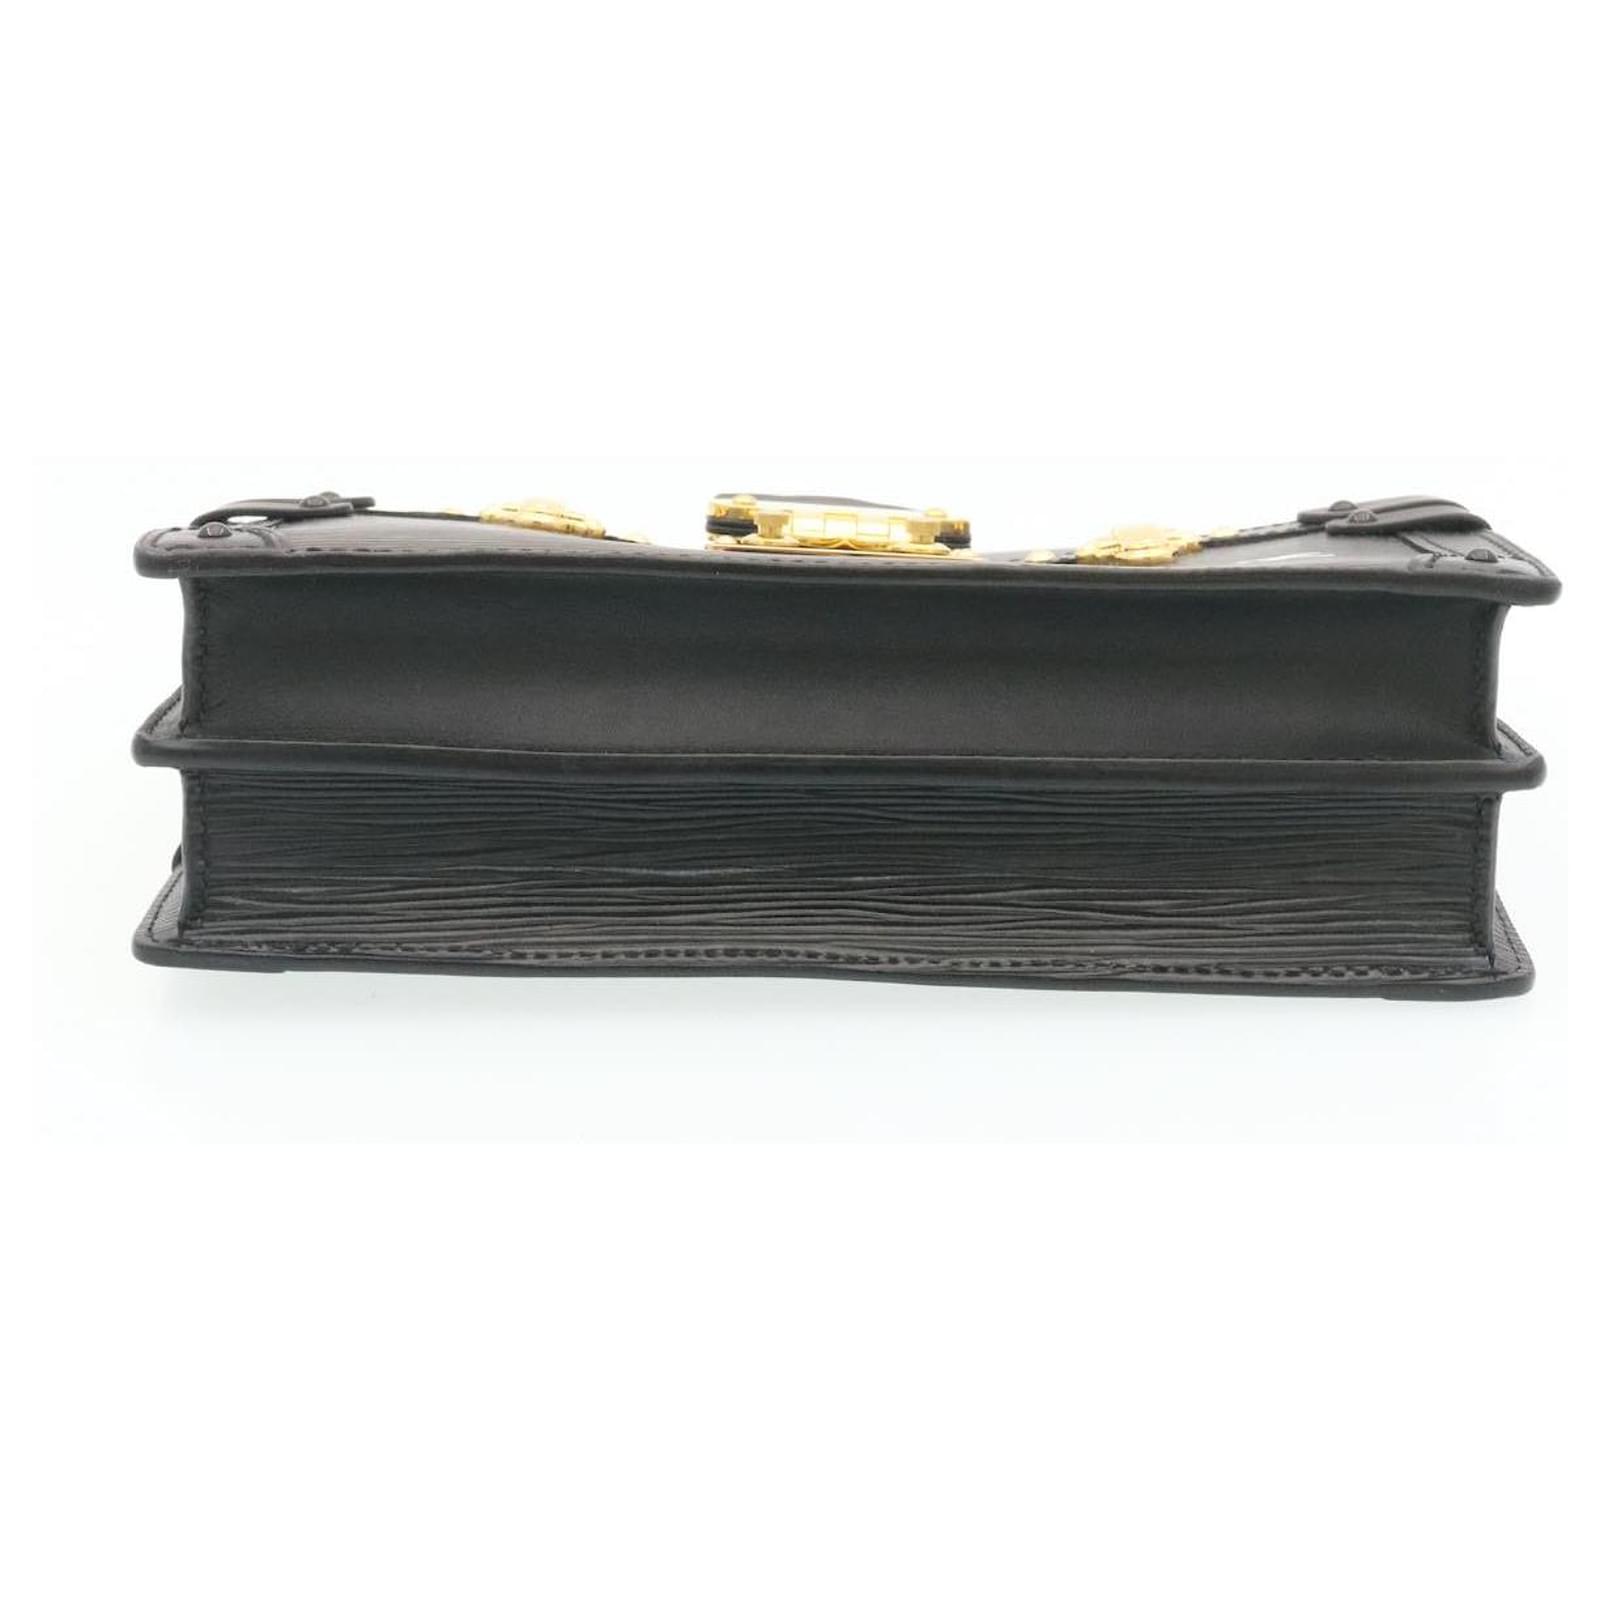 Louis Vuitton Black Epi Trunk Clutch M53052– TC